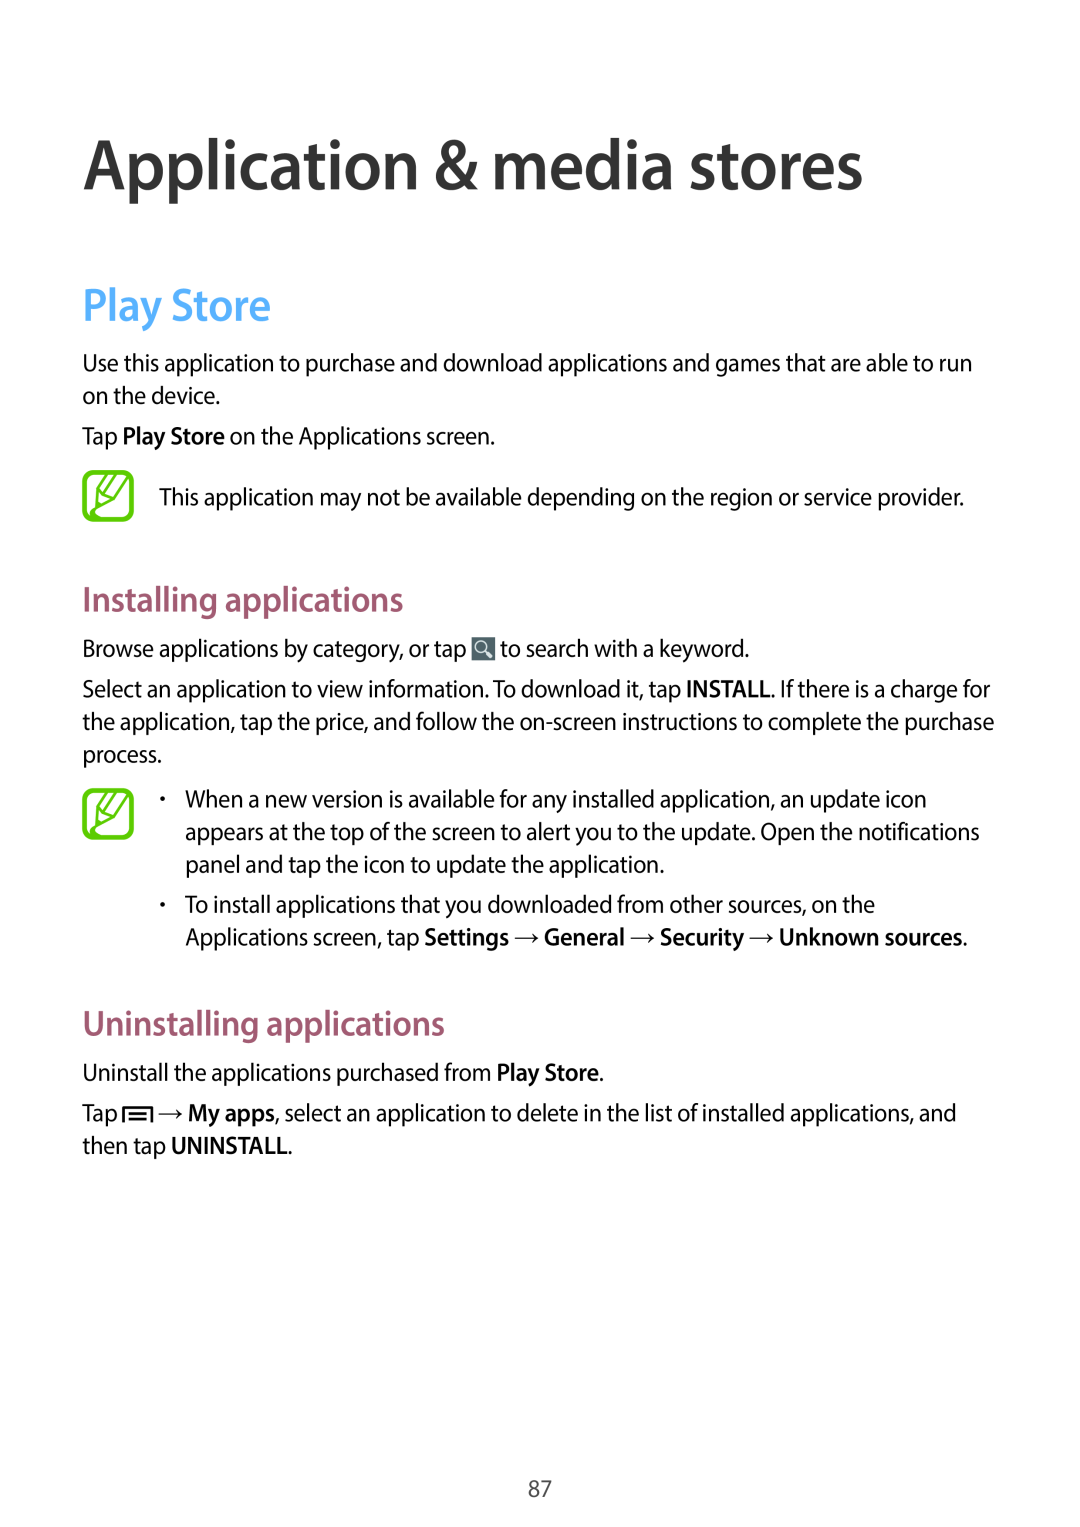 Samsung SM-G7105ZWAATO manual Application & media stores, Play Store, Installing applications, Uninstalling applications 